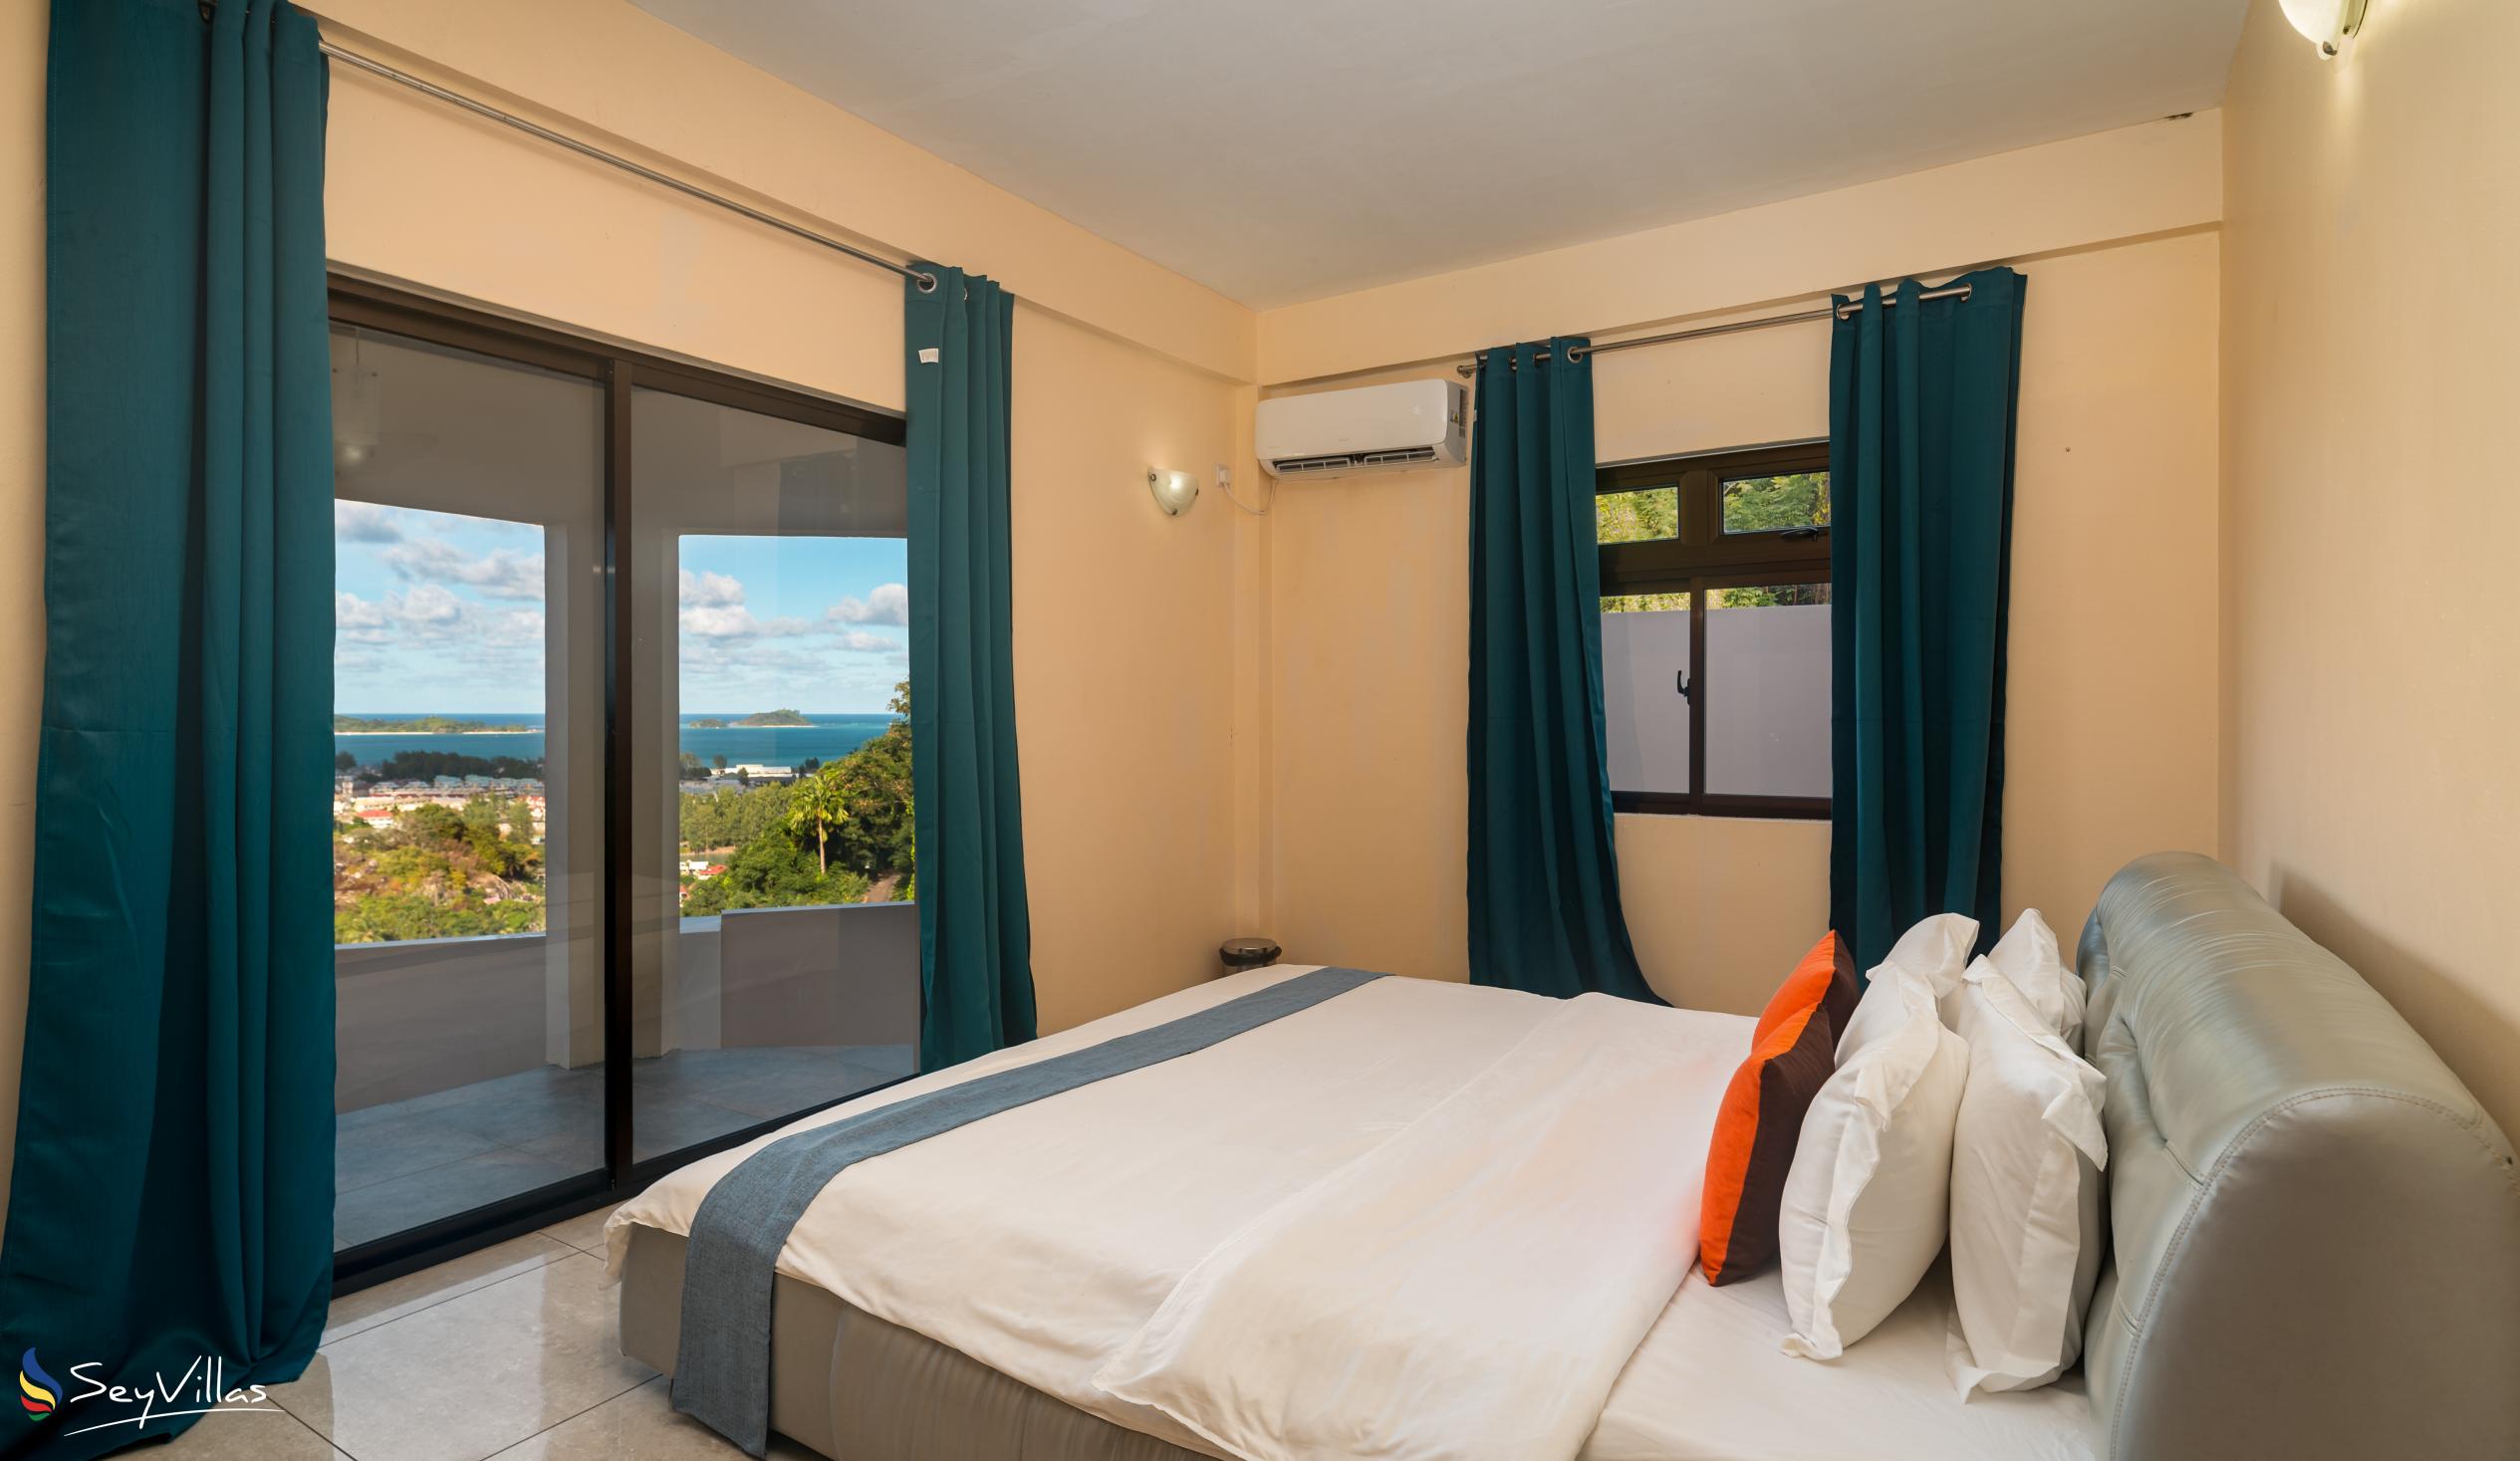 Foto 70: Maison L'Horizon - Appartamento con 2 camere Vann Nor - Mahé (Seychelles)